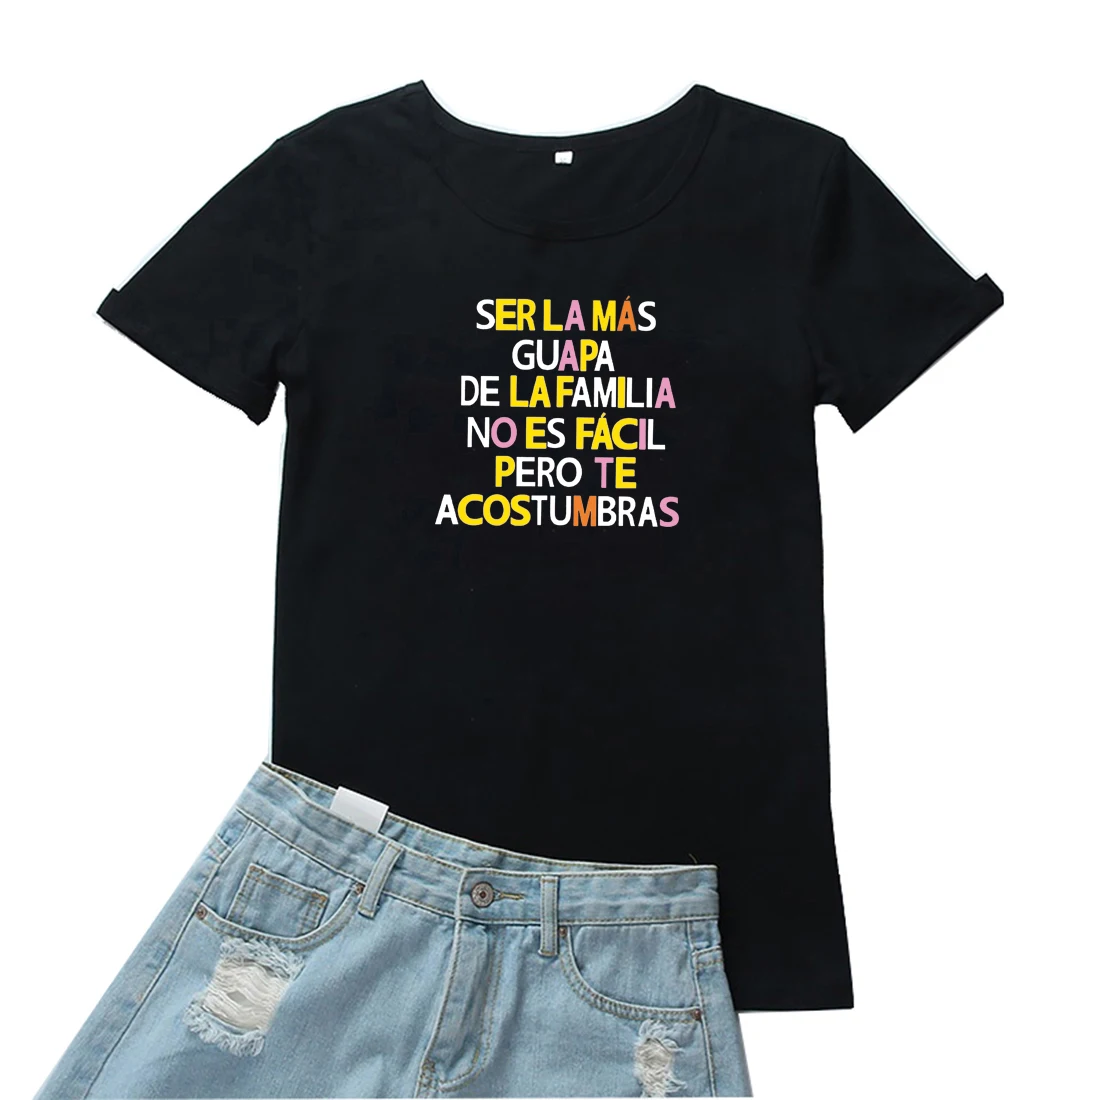 Ser La Mas De La Guapa Familia Nē, Es Facil Pero Te Acostumbras Sieviešu T Krekls Vaļīga Apģērba Tshirts Sieviešu Smieklīgi Spāņu Valoda